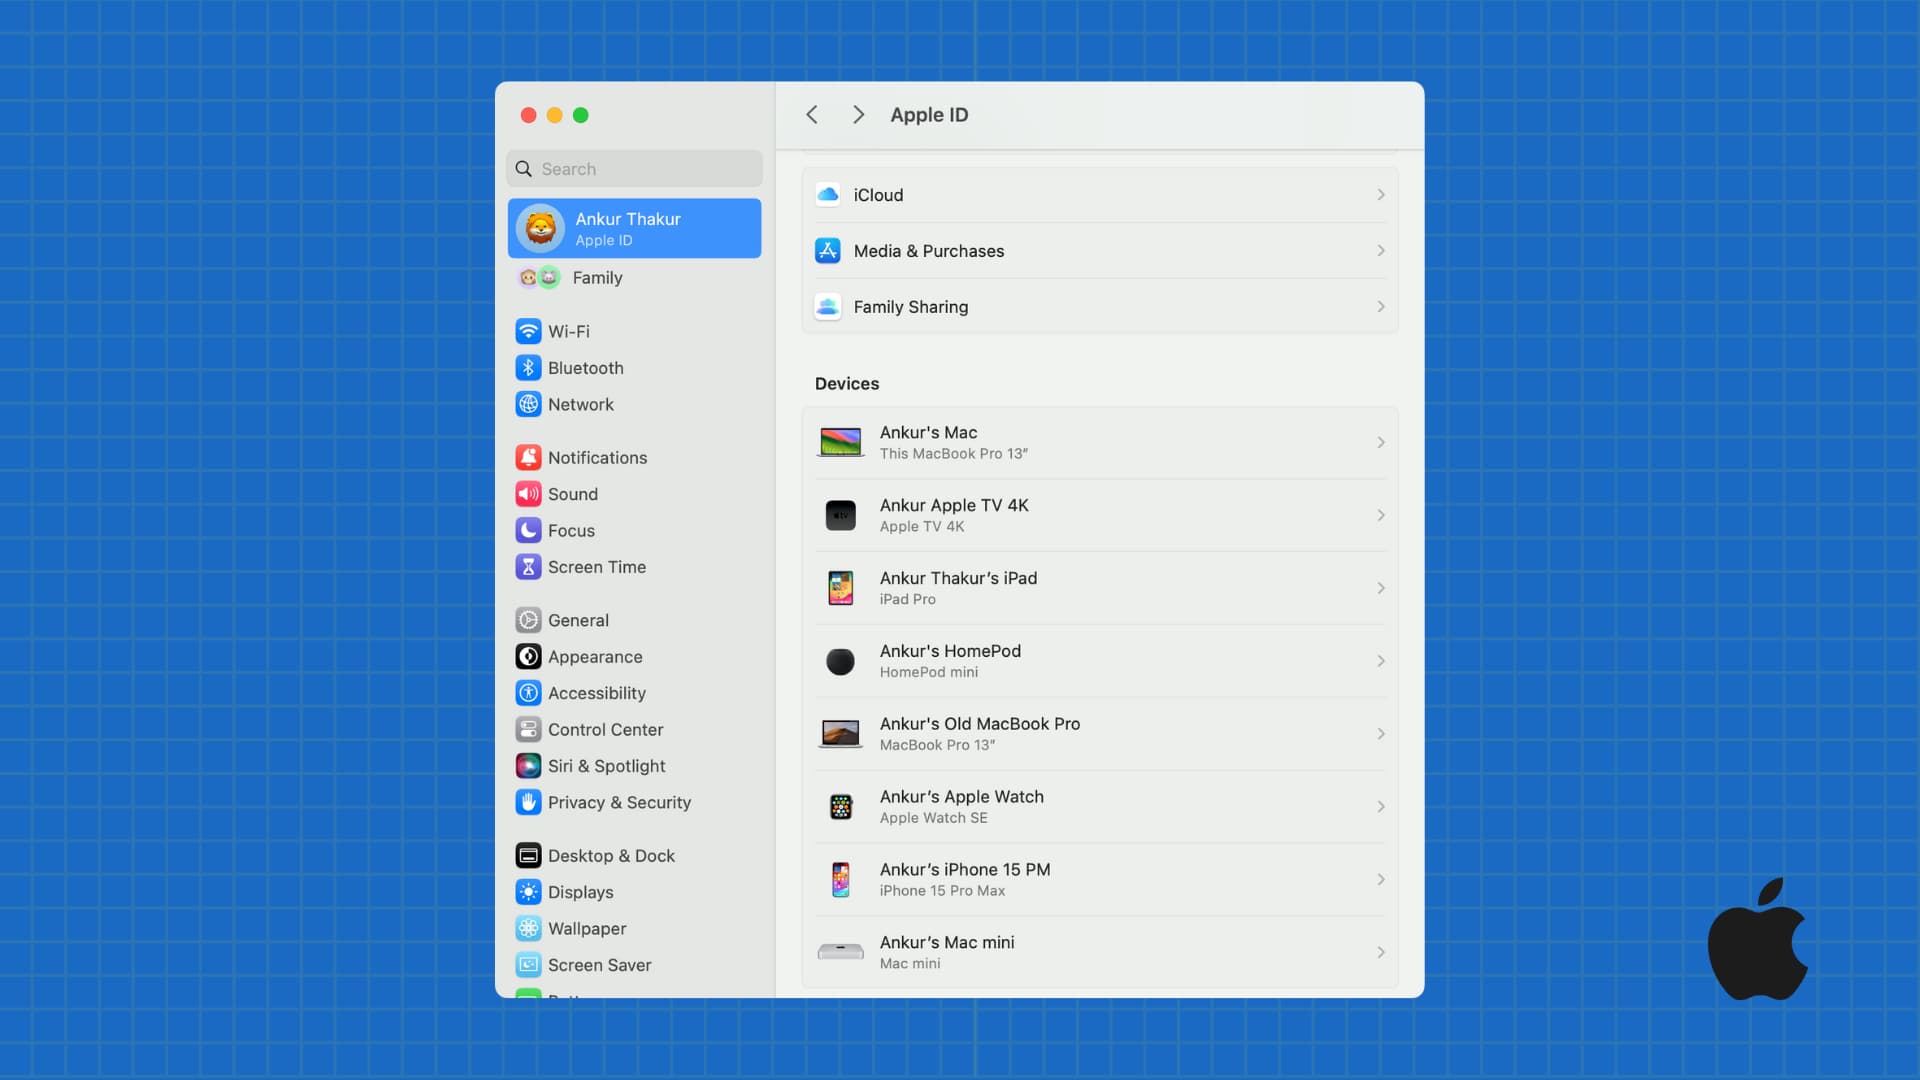 Apple ID screen in Mac System Settings